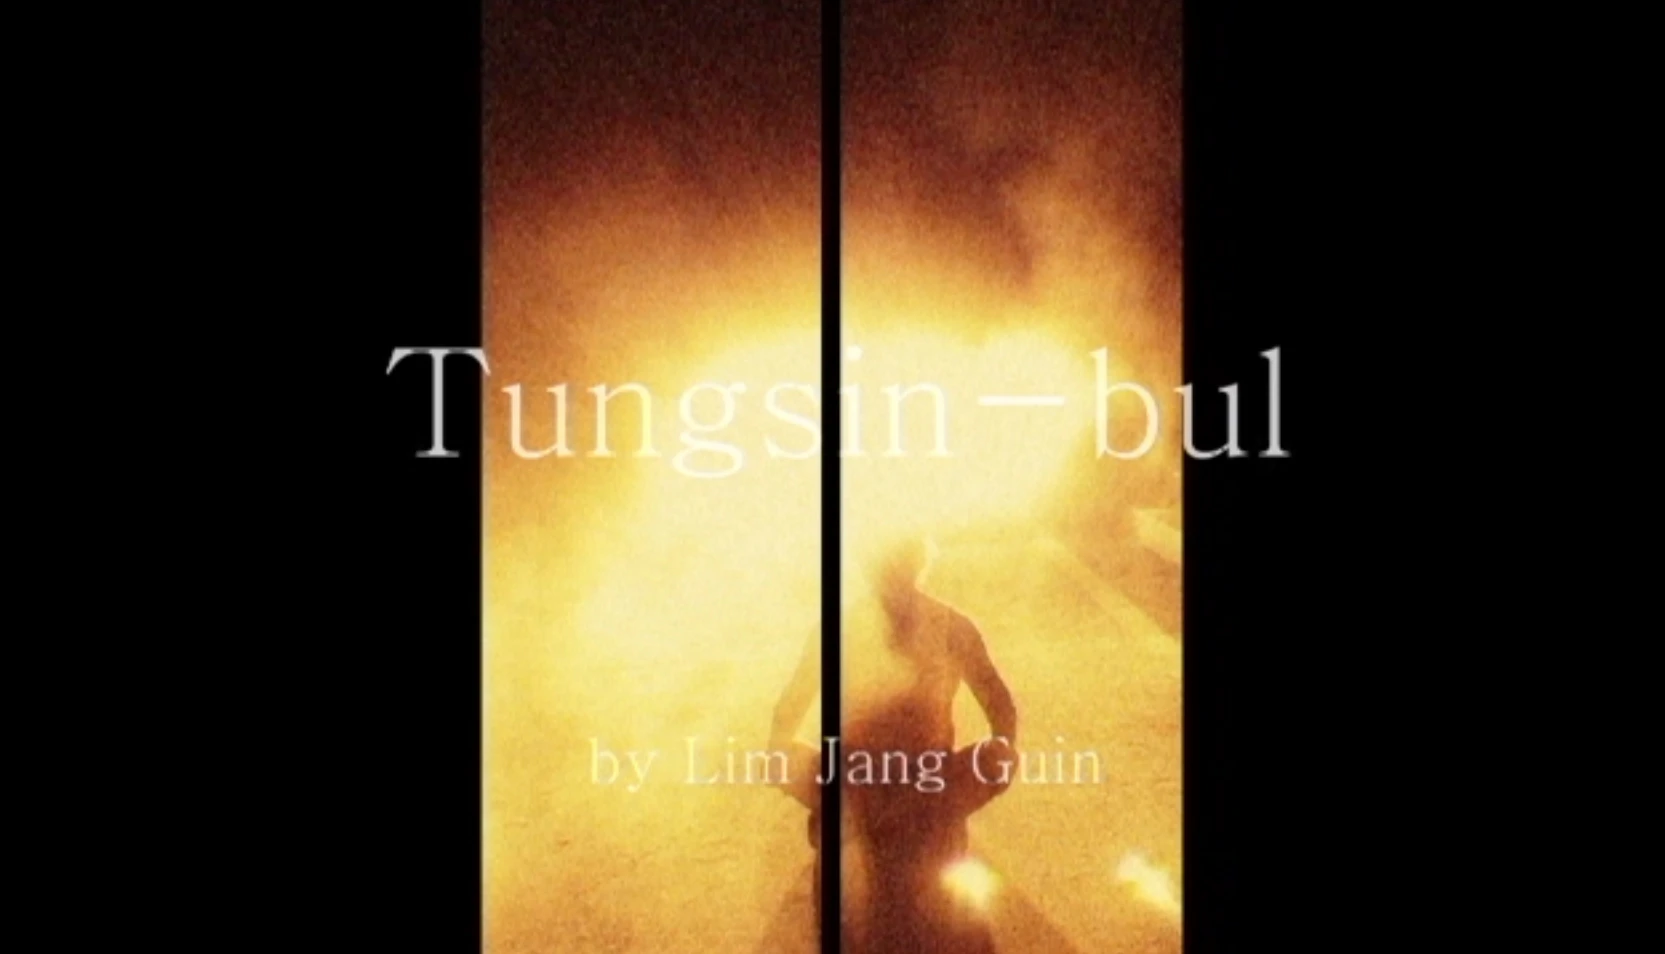 Tungsin-bul become dusty